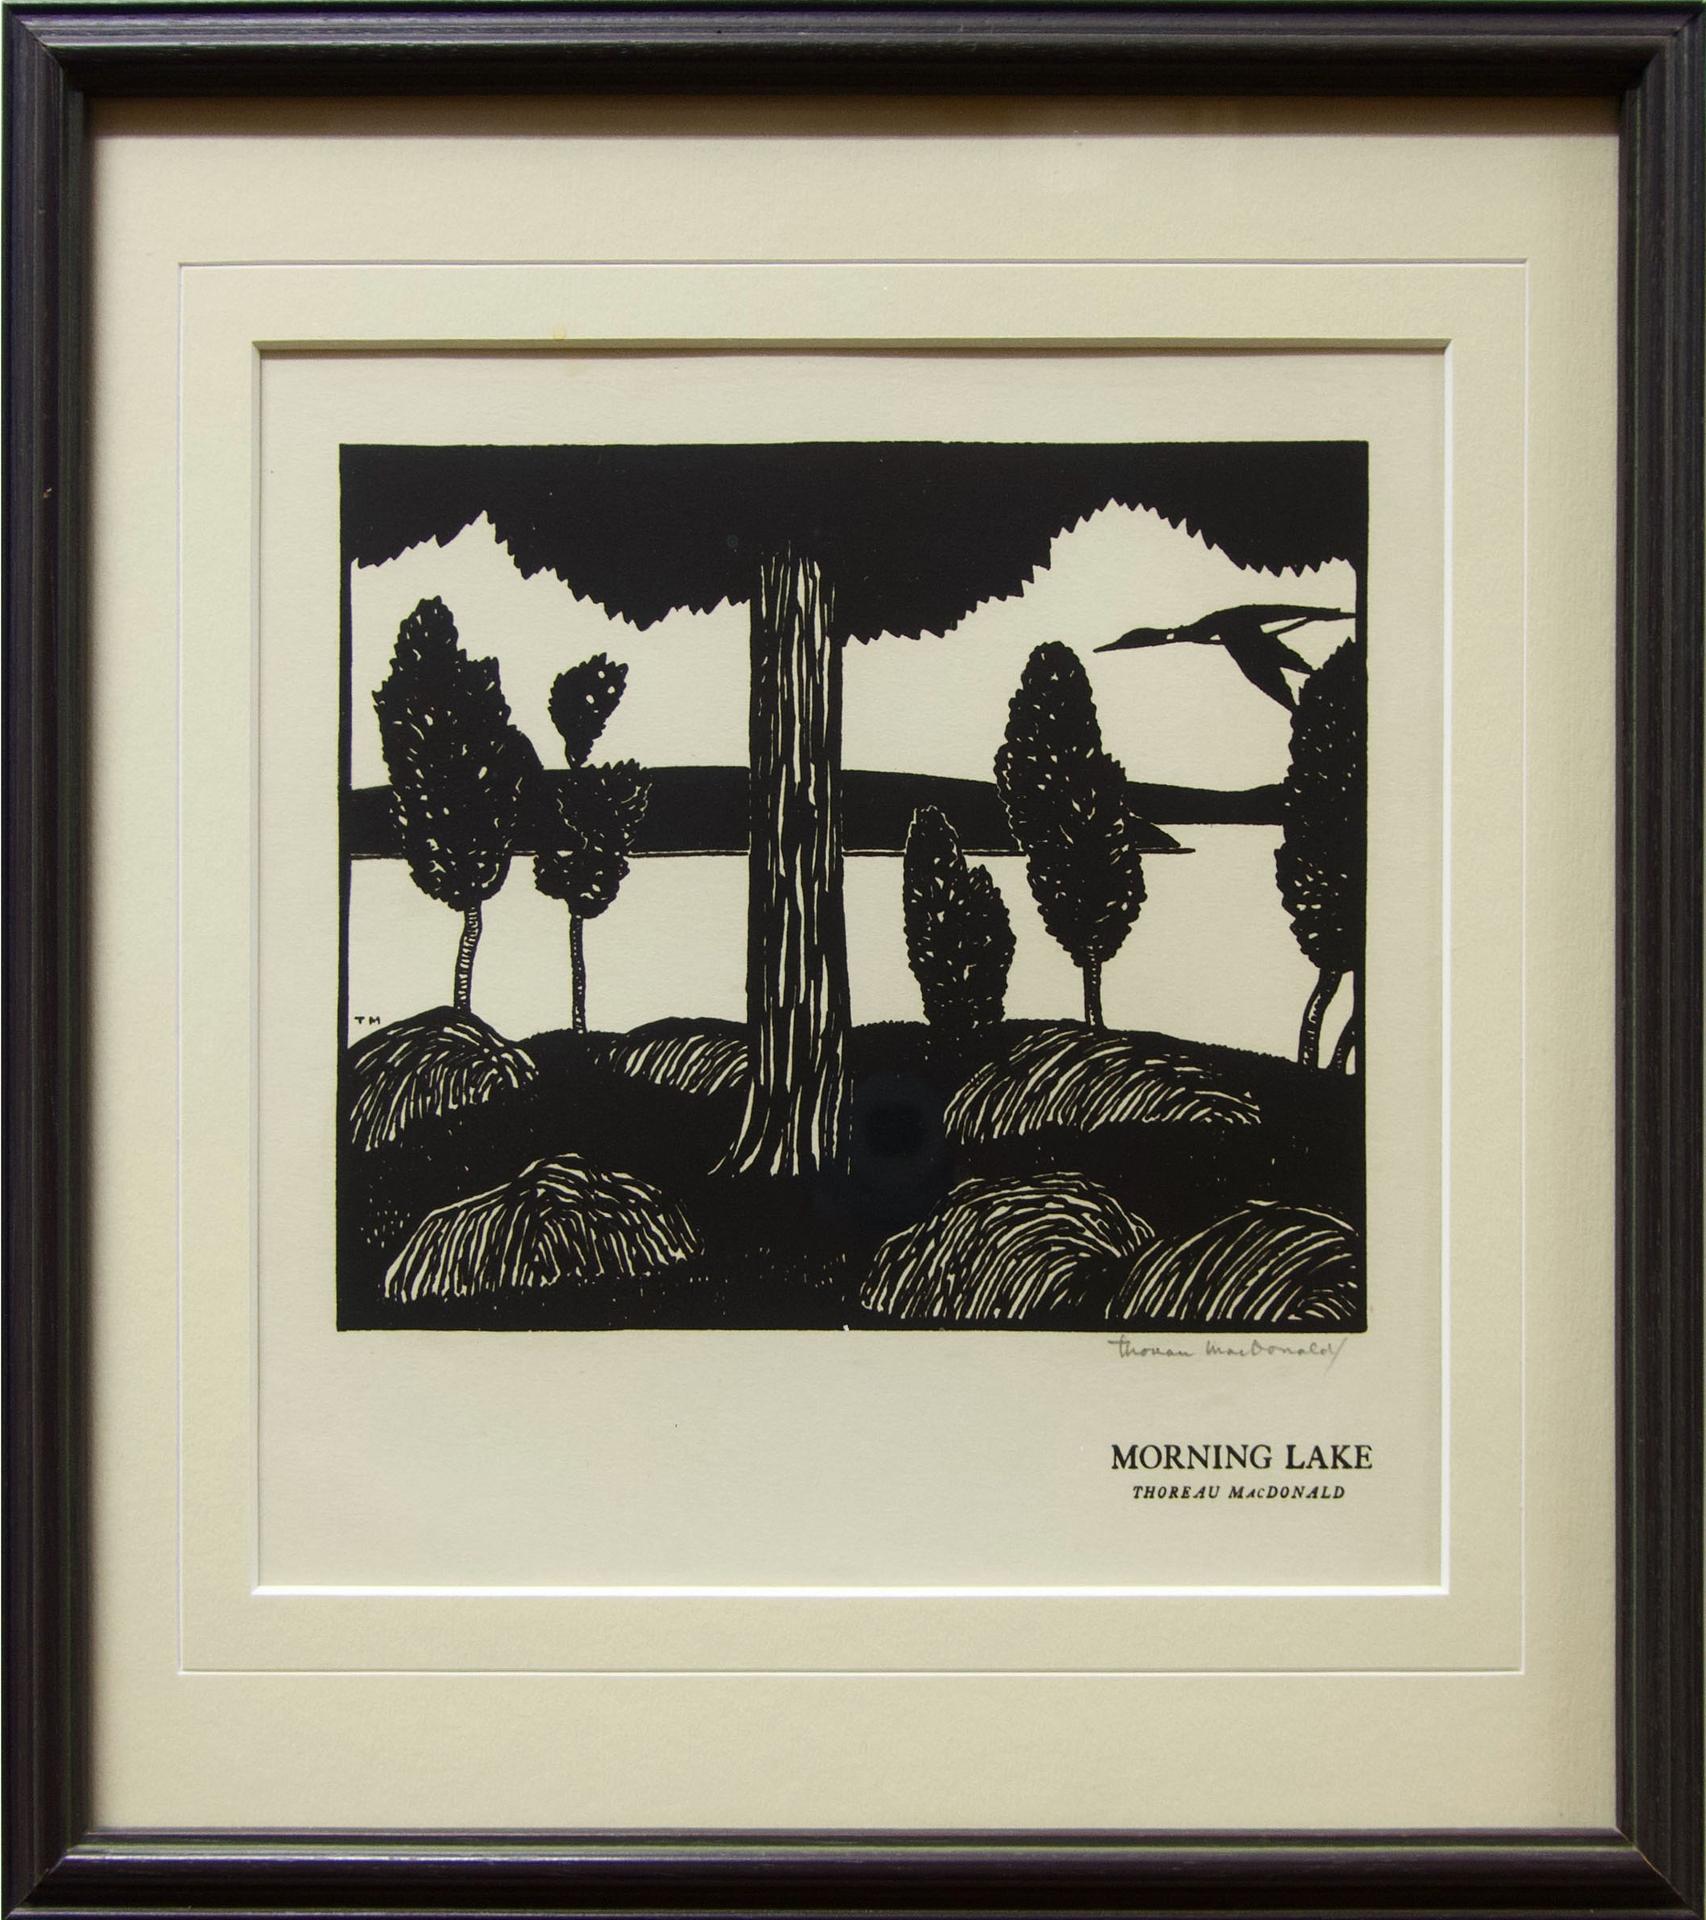 Thoreau MacDonald (1901-1989) - Morning Lake